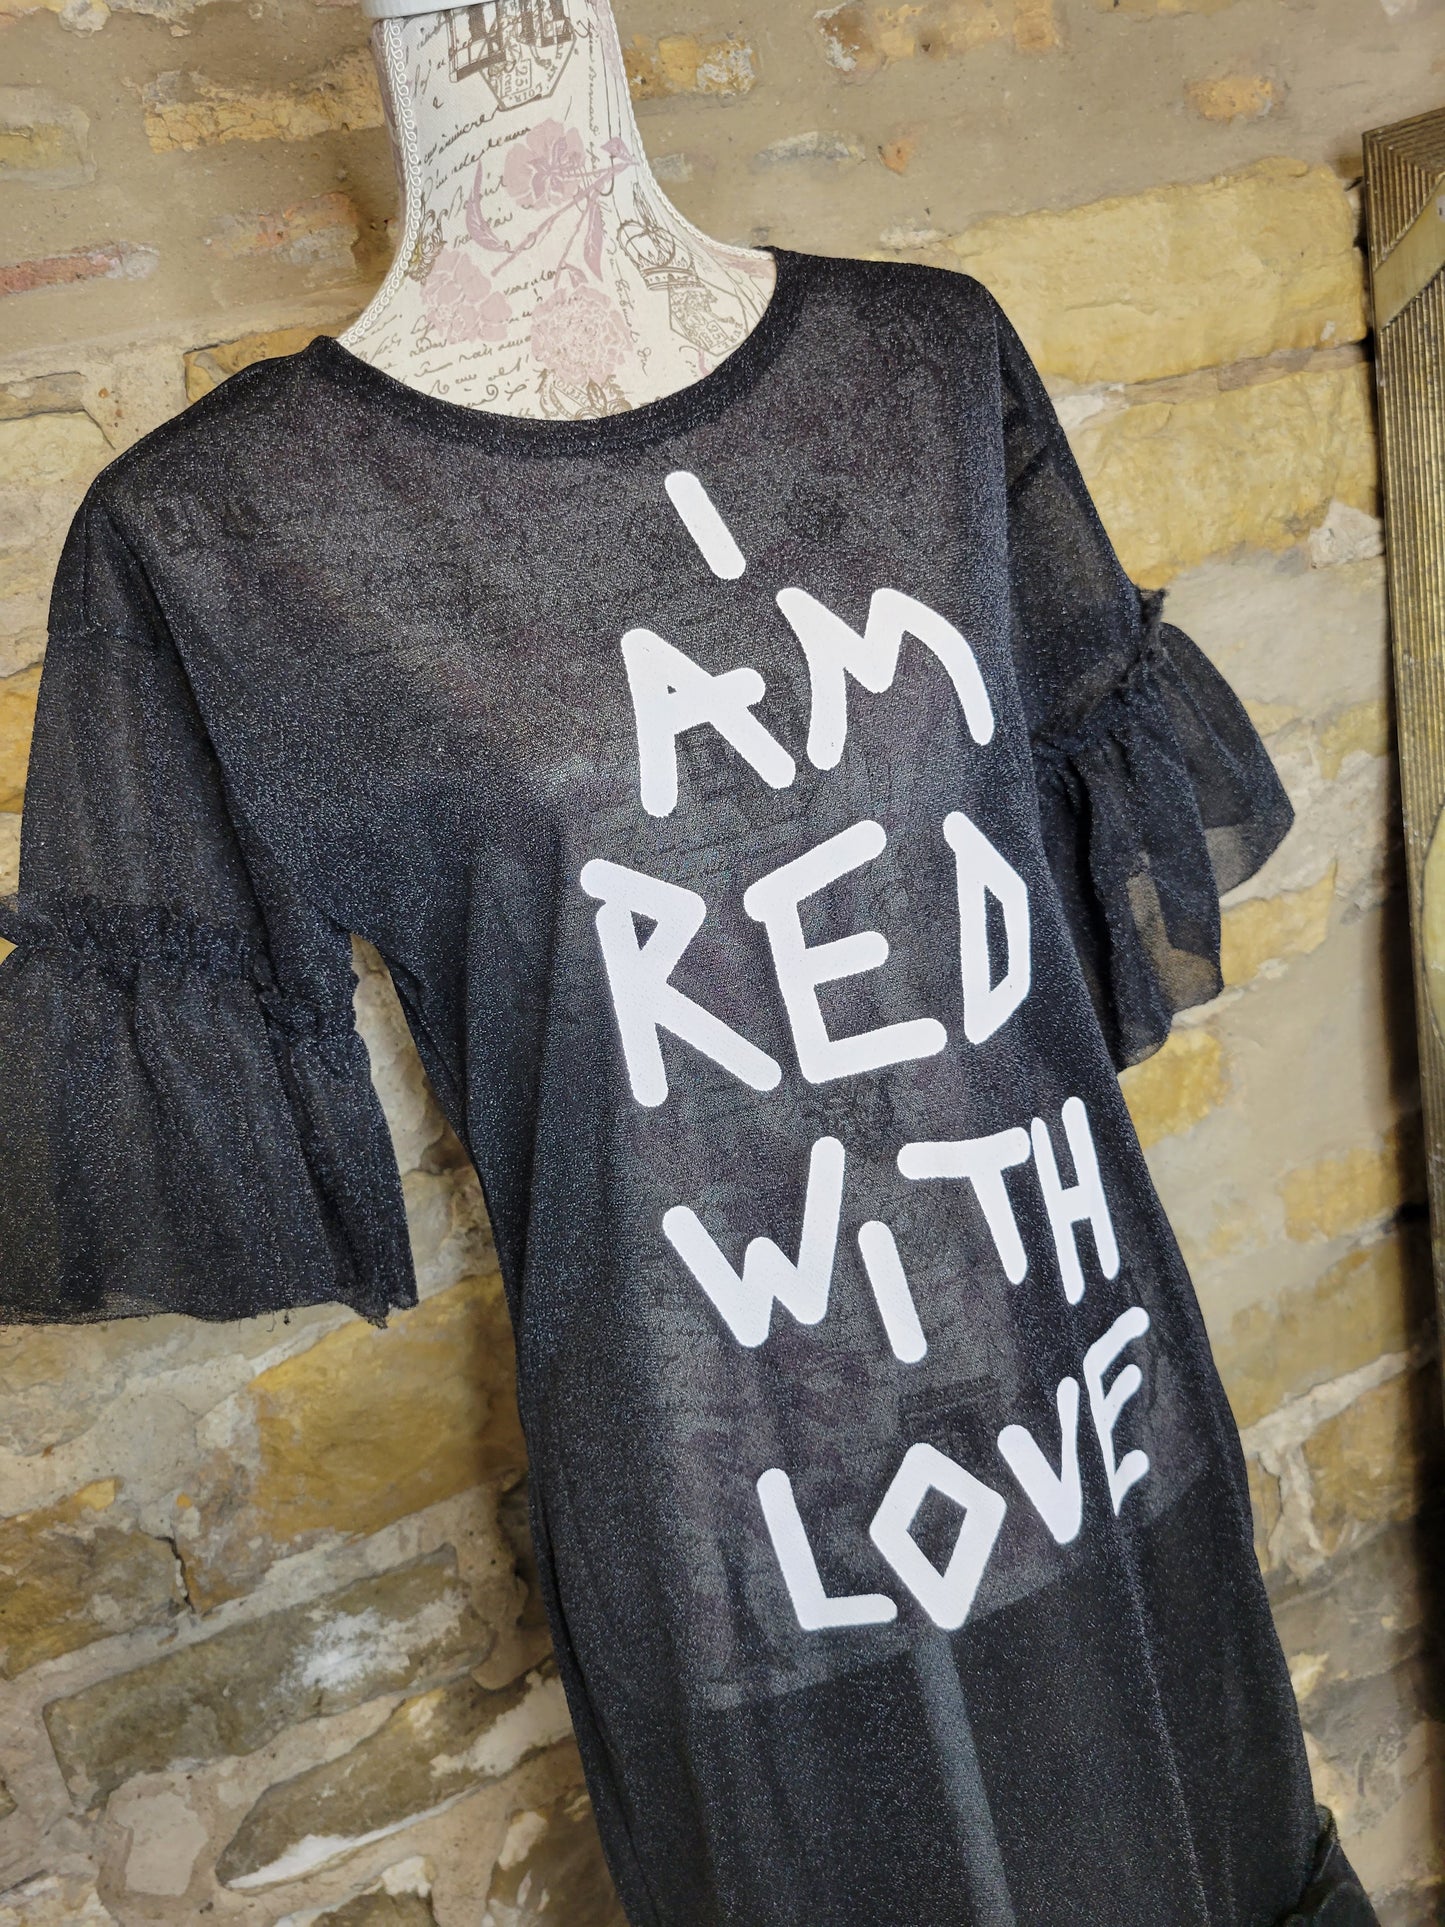 I Am Red With Love Black Dress Sz XS/S